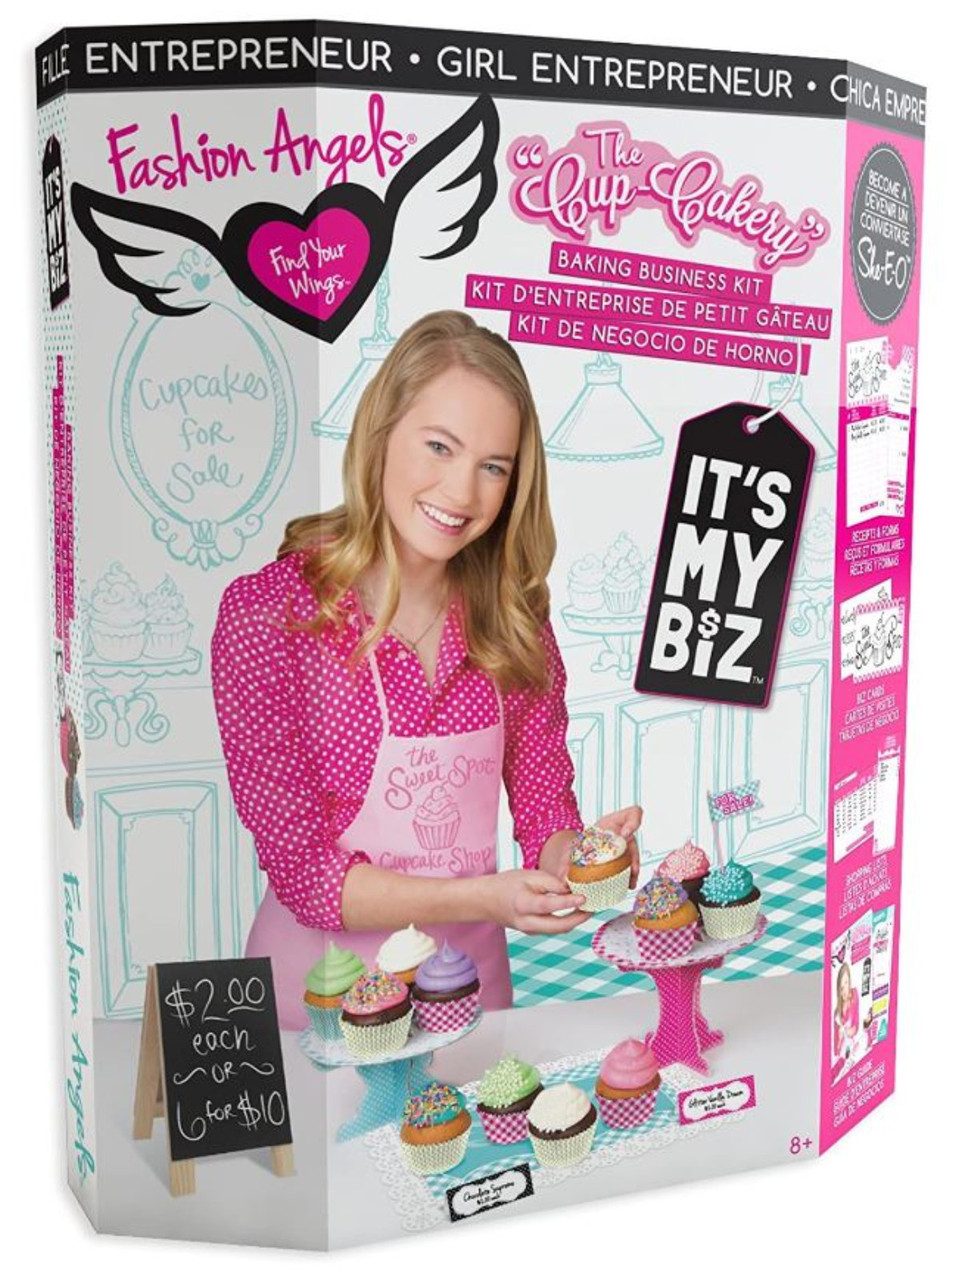 Fashion Angels It's My Biz Cup-Cakery Teen Entrepreneur Baking Business Kit  - Sports Diamond